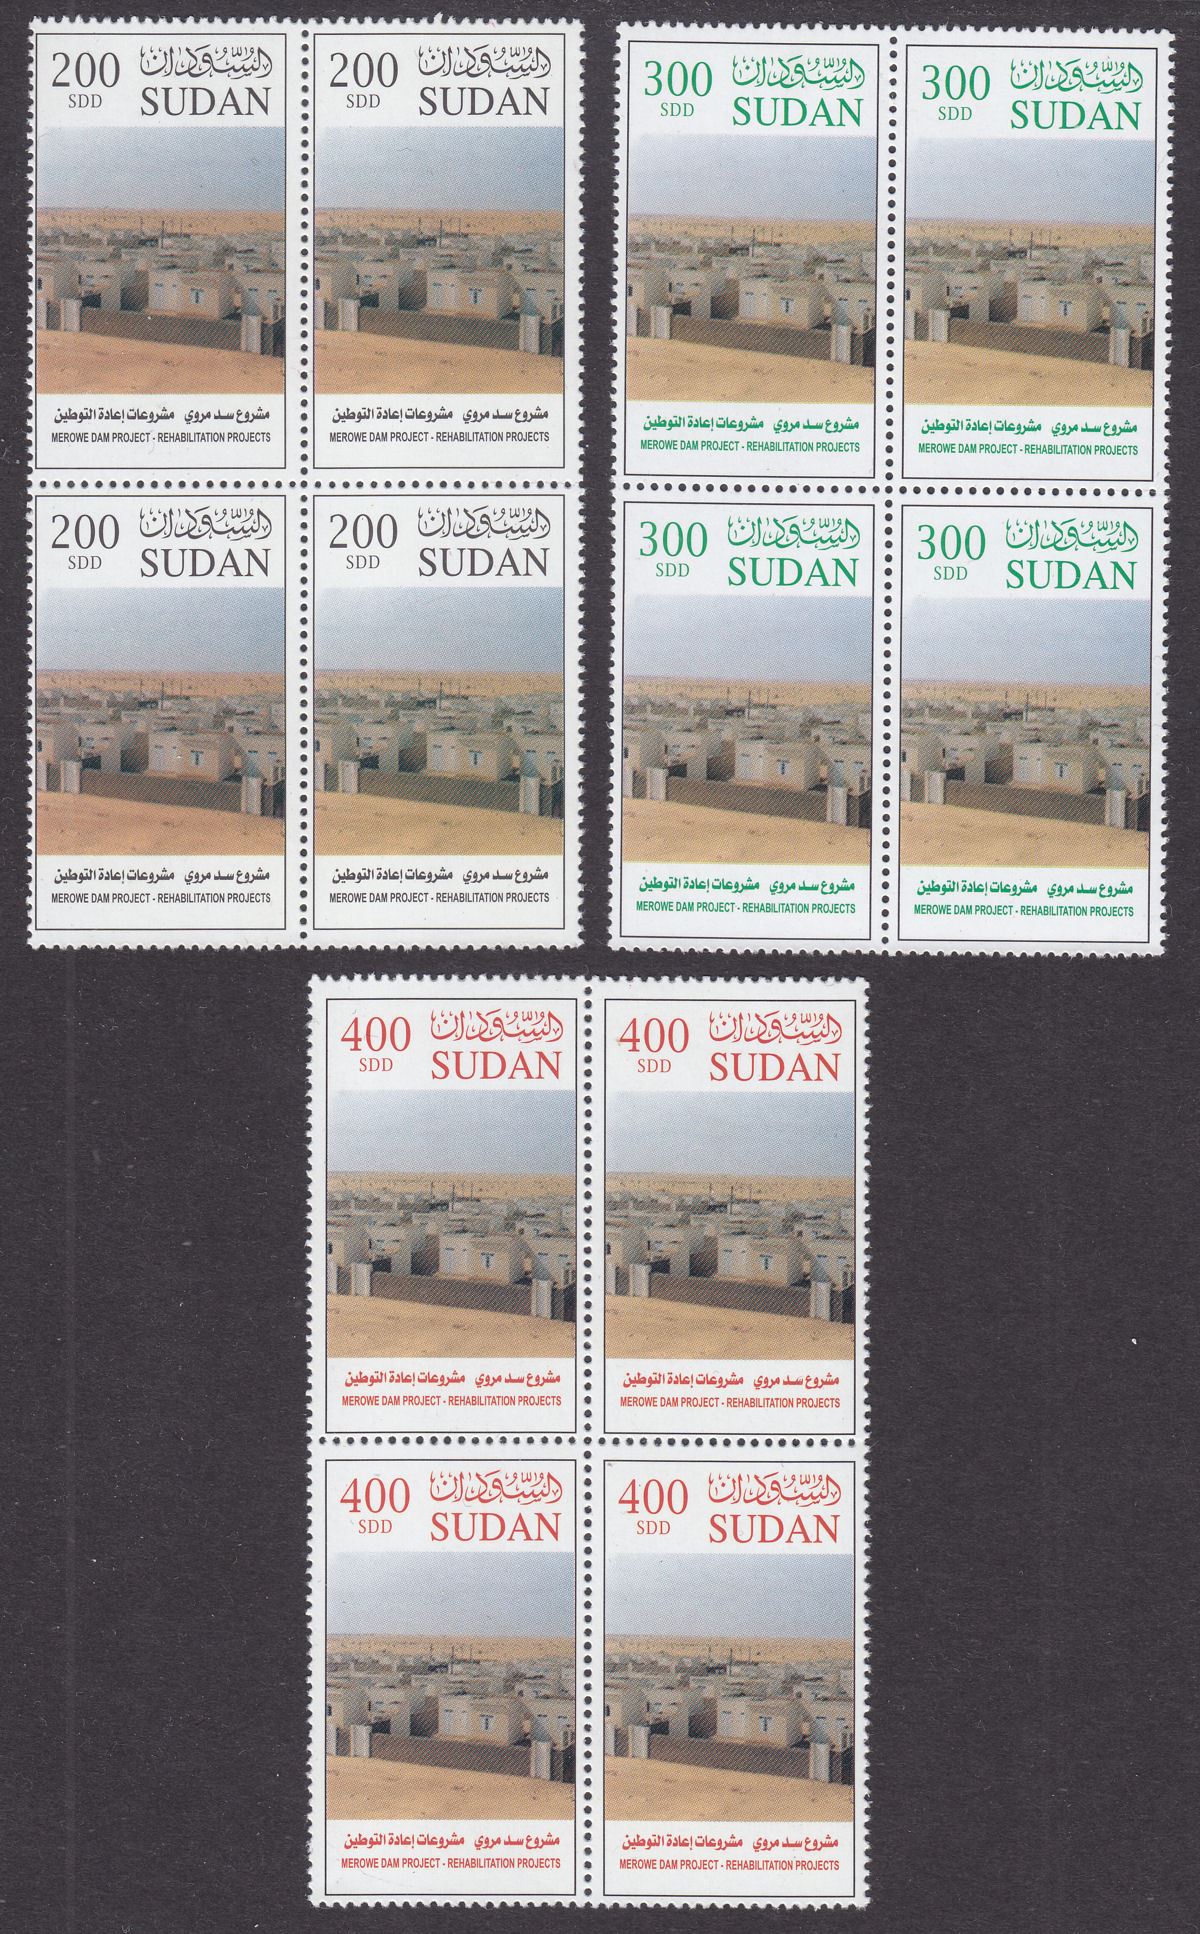 Sudan 2005 Merowe Dam Project Block Set UM Mint SG unlisted